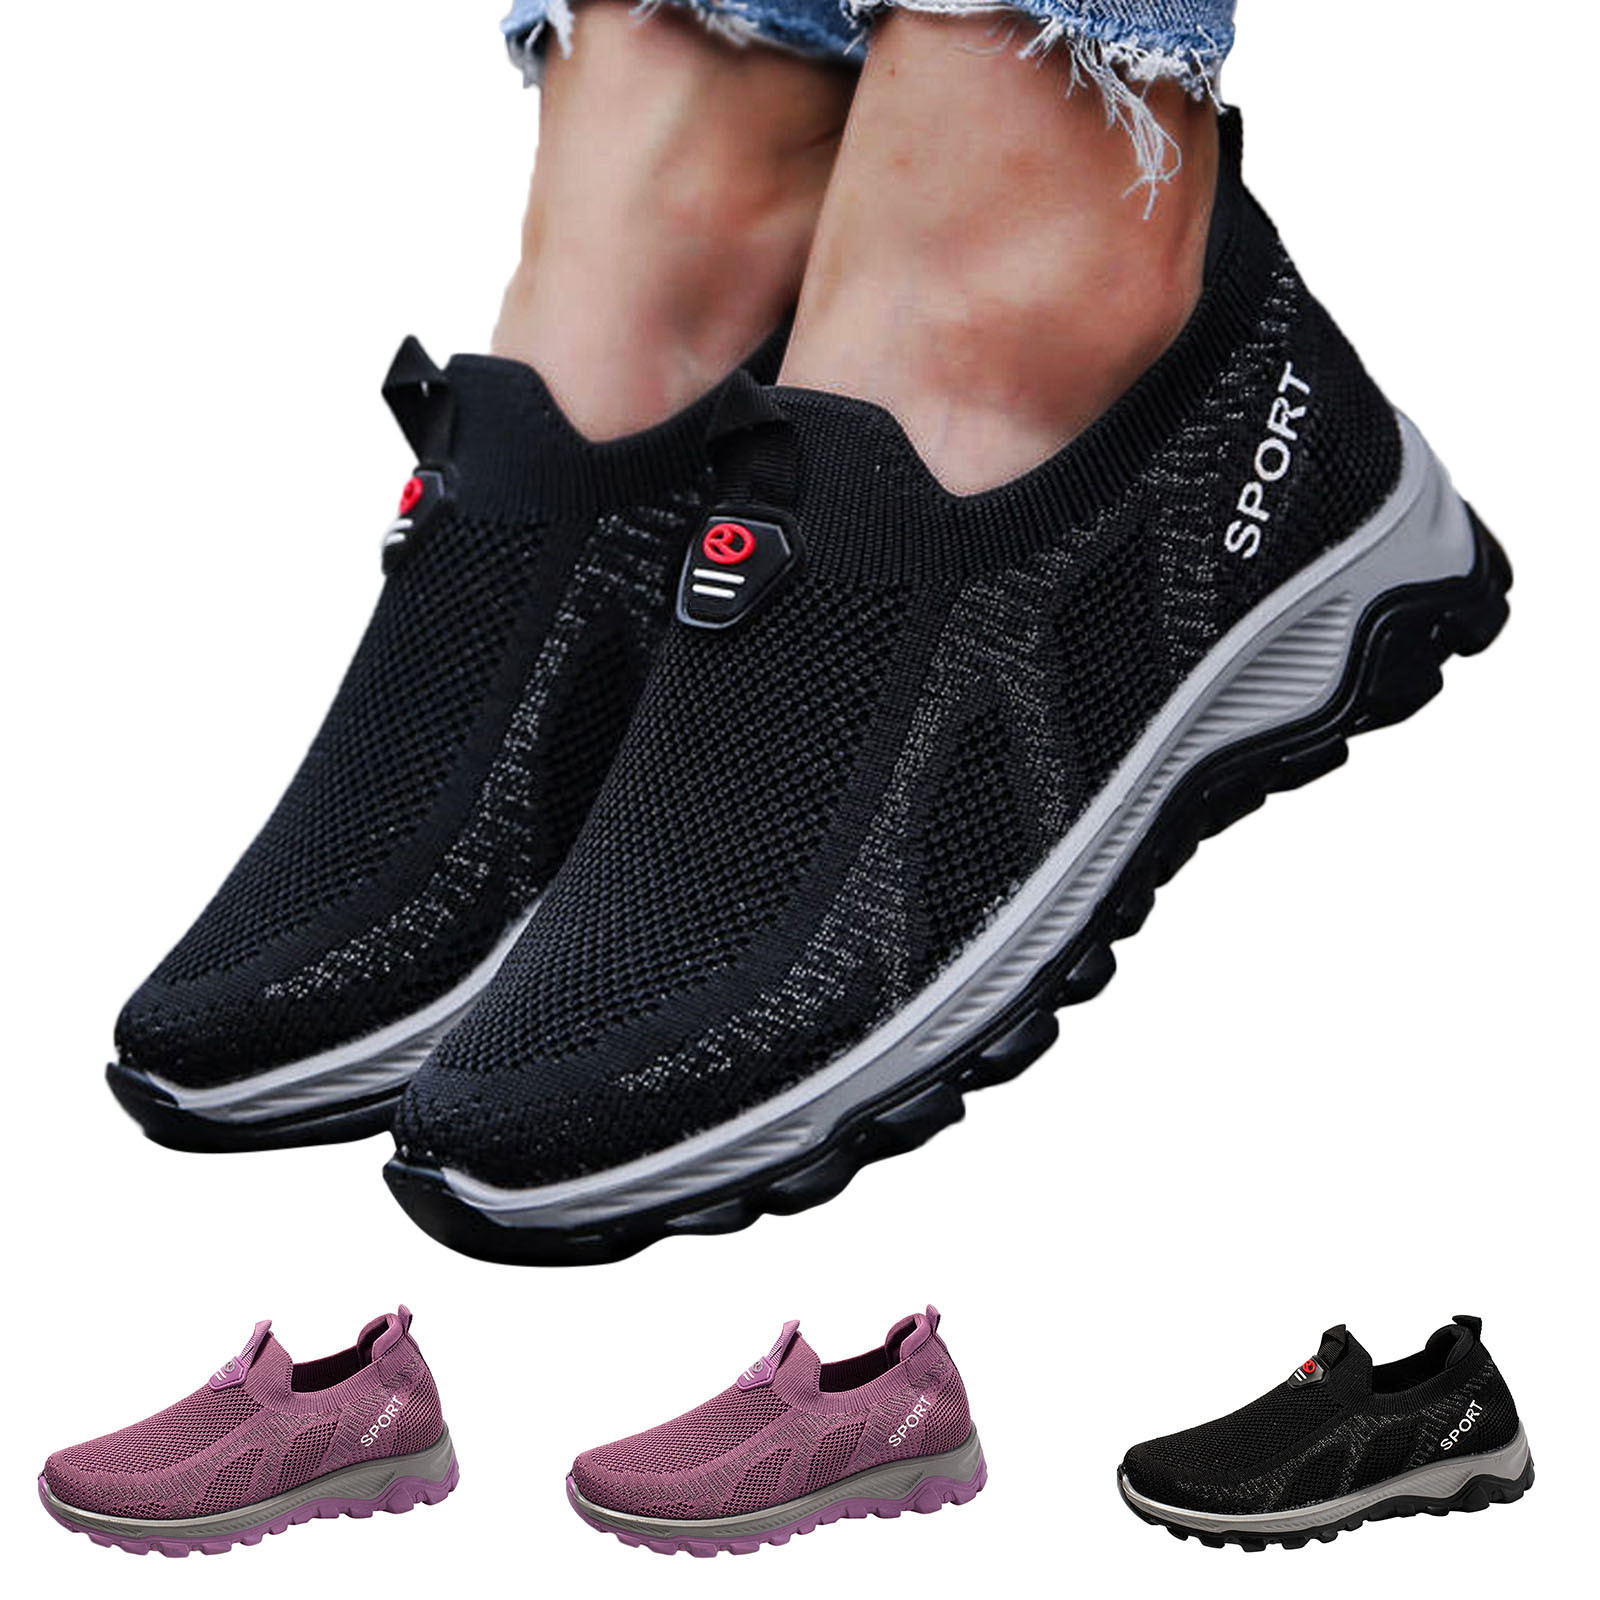 dmqupv Womens Comfort Shoes Womens Casual Shoes Size 8 Black Sneaker For Women Mesh Running Shoes Tennis Man Casual Shoe Black 6.5 - image 4 of 5